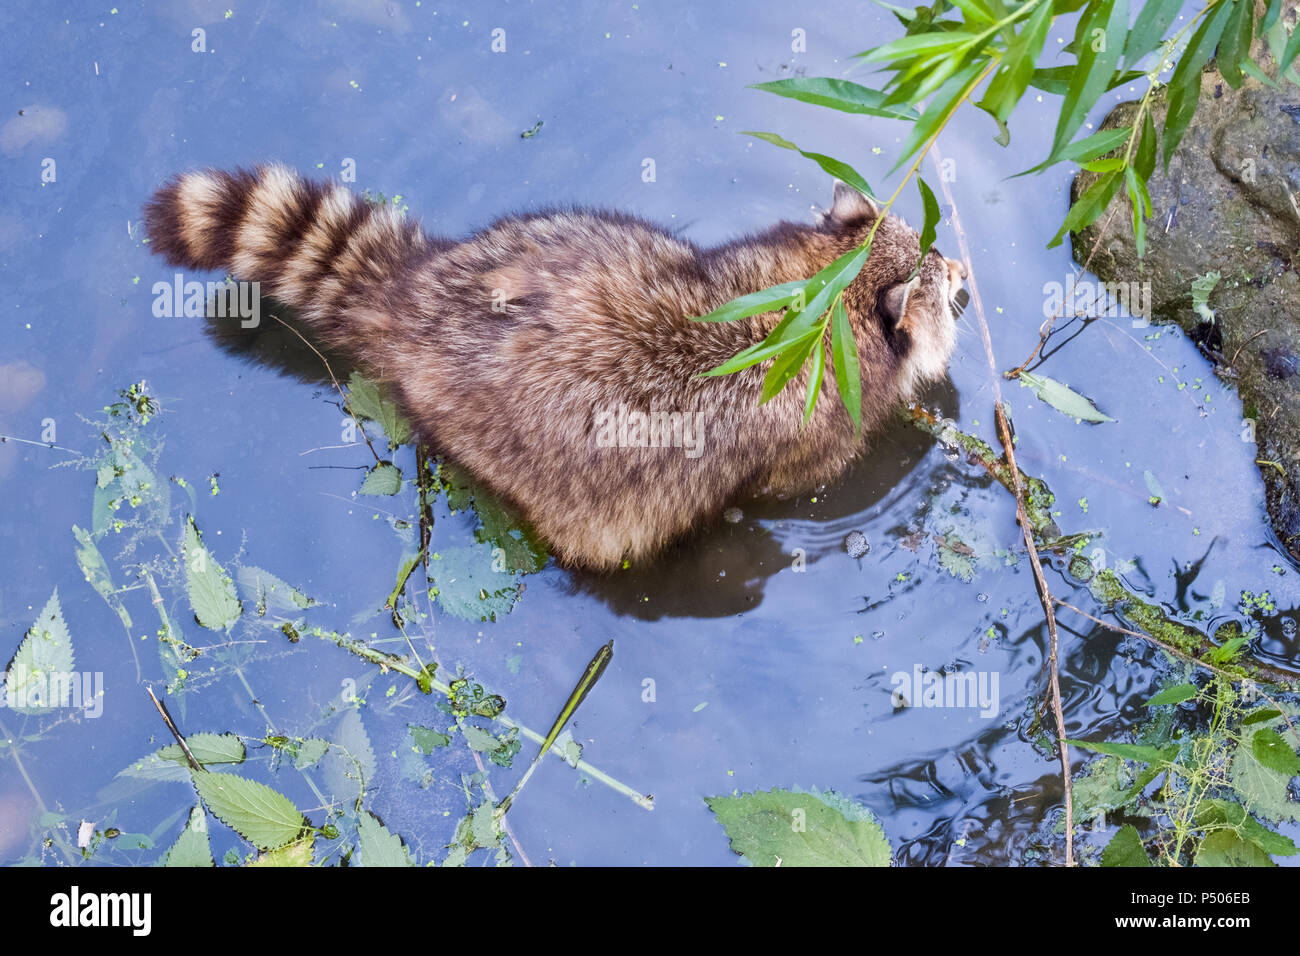 Raccoon in water, zoo park Gaia, Kerkrade, Netherlands. Stock Photo